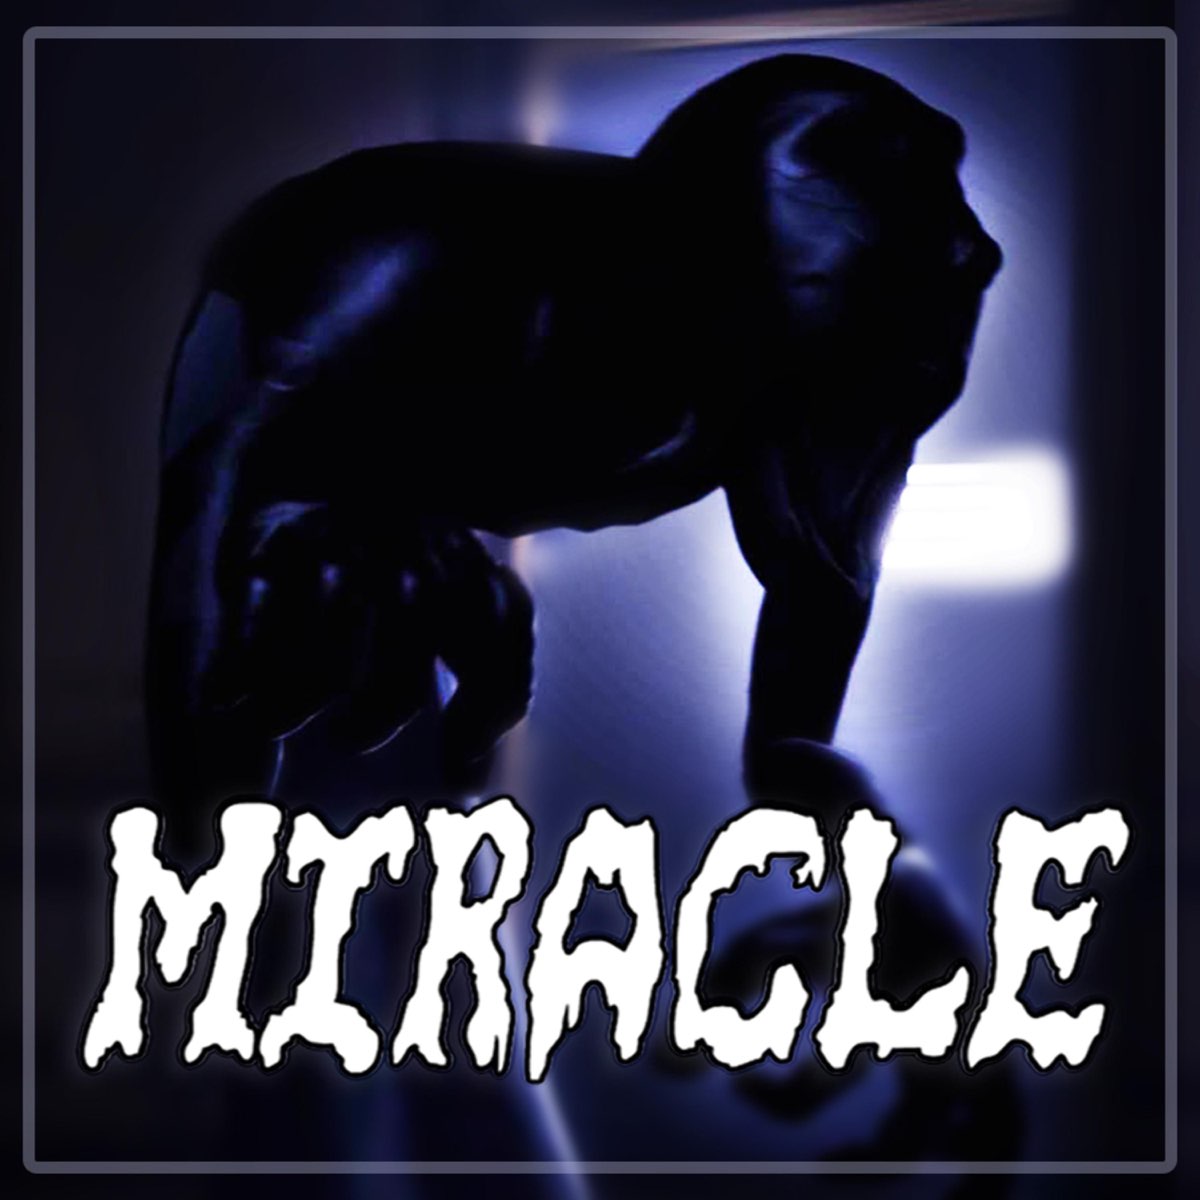 Miracle песня. Empty Dreams обложка. Opinions cg5 обложка. Картинки с надписью " Miracle Music". Miracle feat